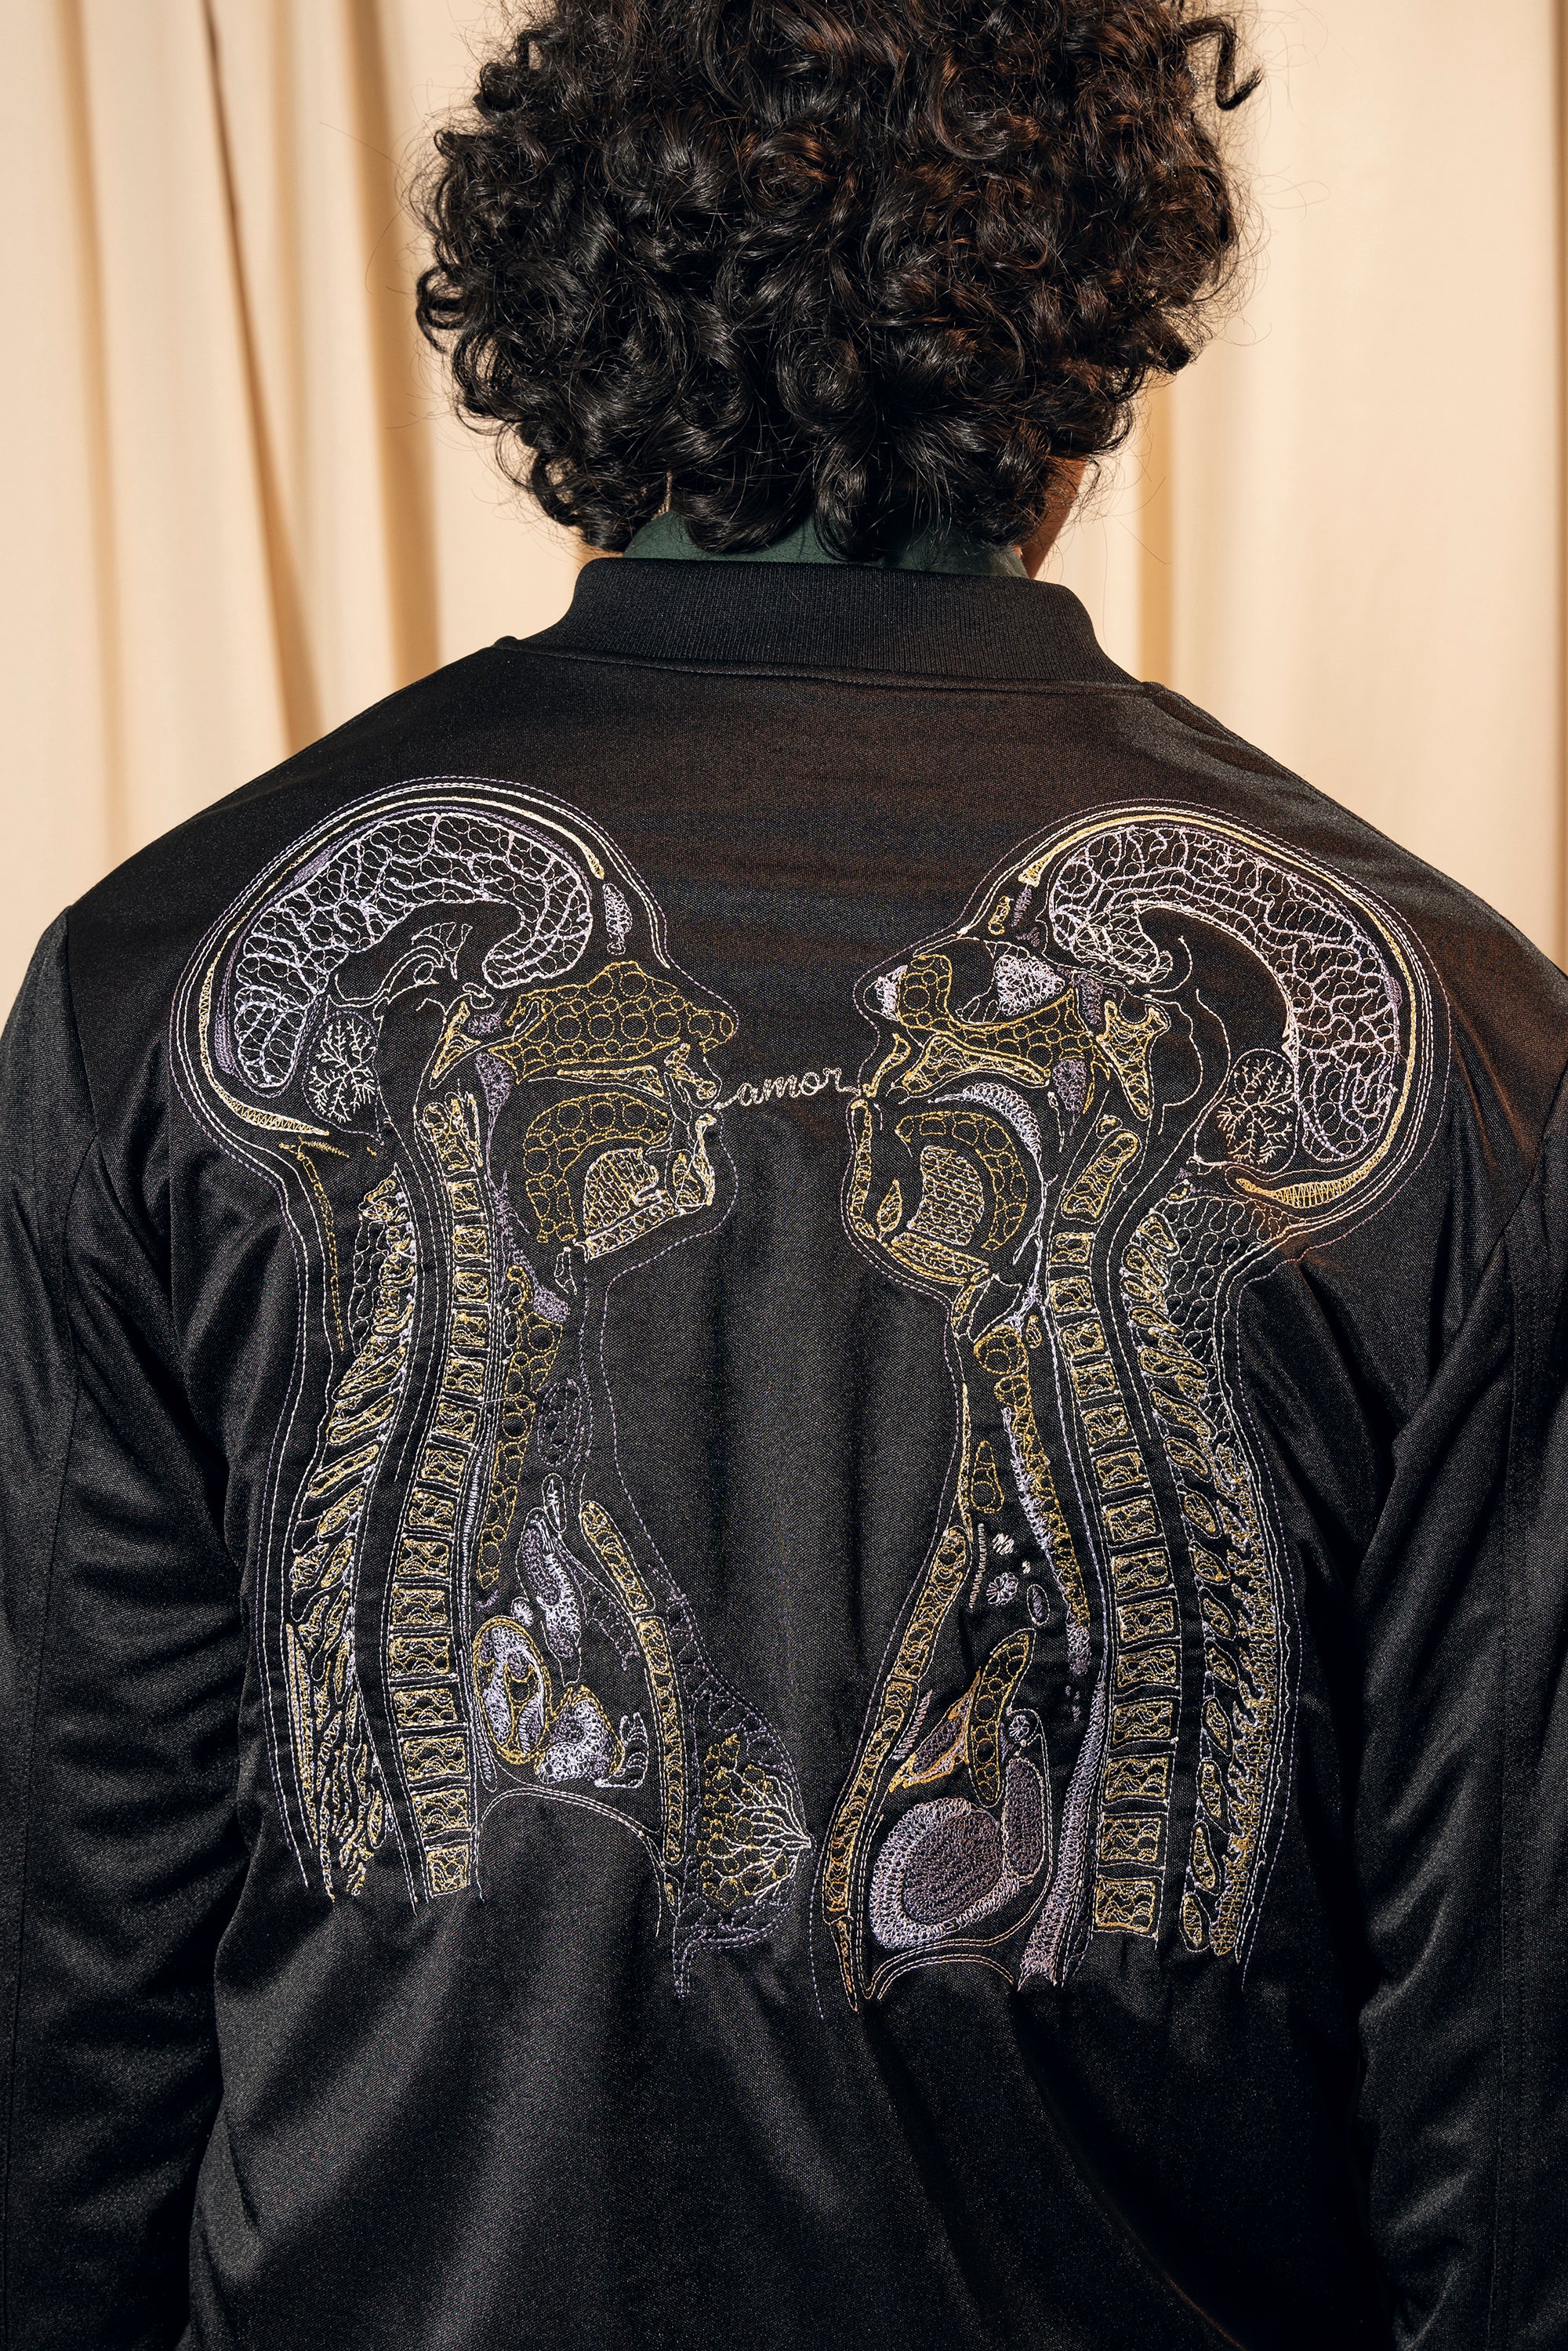 men's mid-season jacket black satin cotton artisanal graphic embroidery Peruvian manufacturing